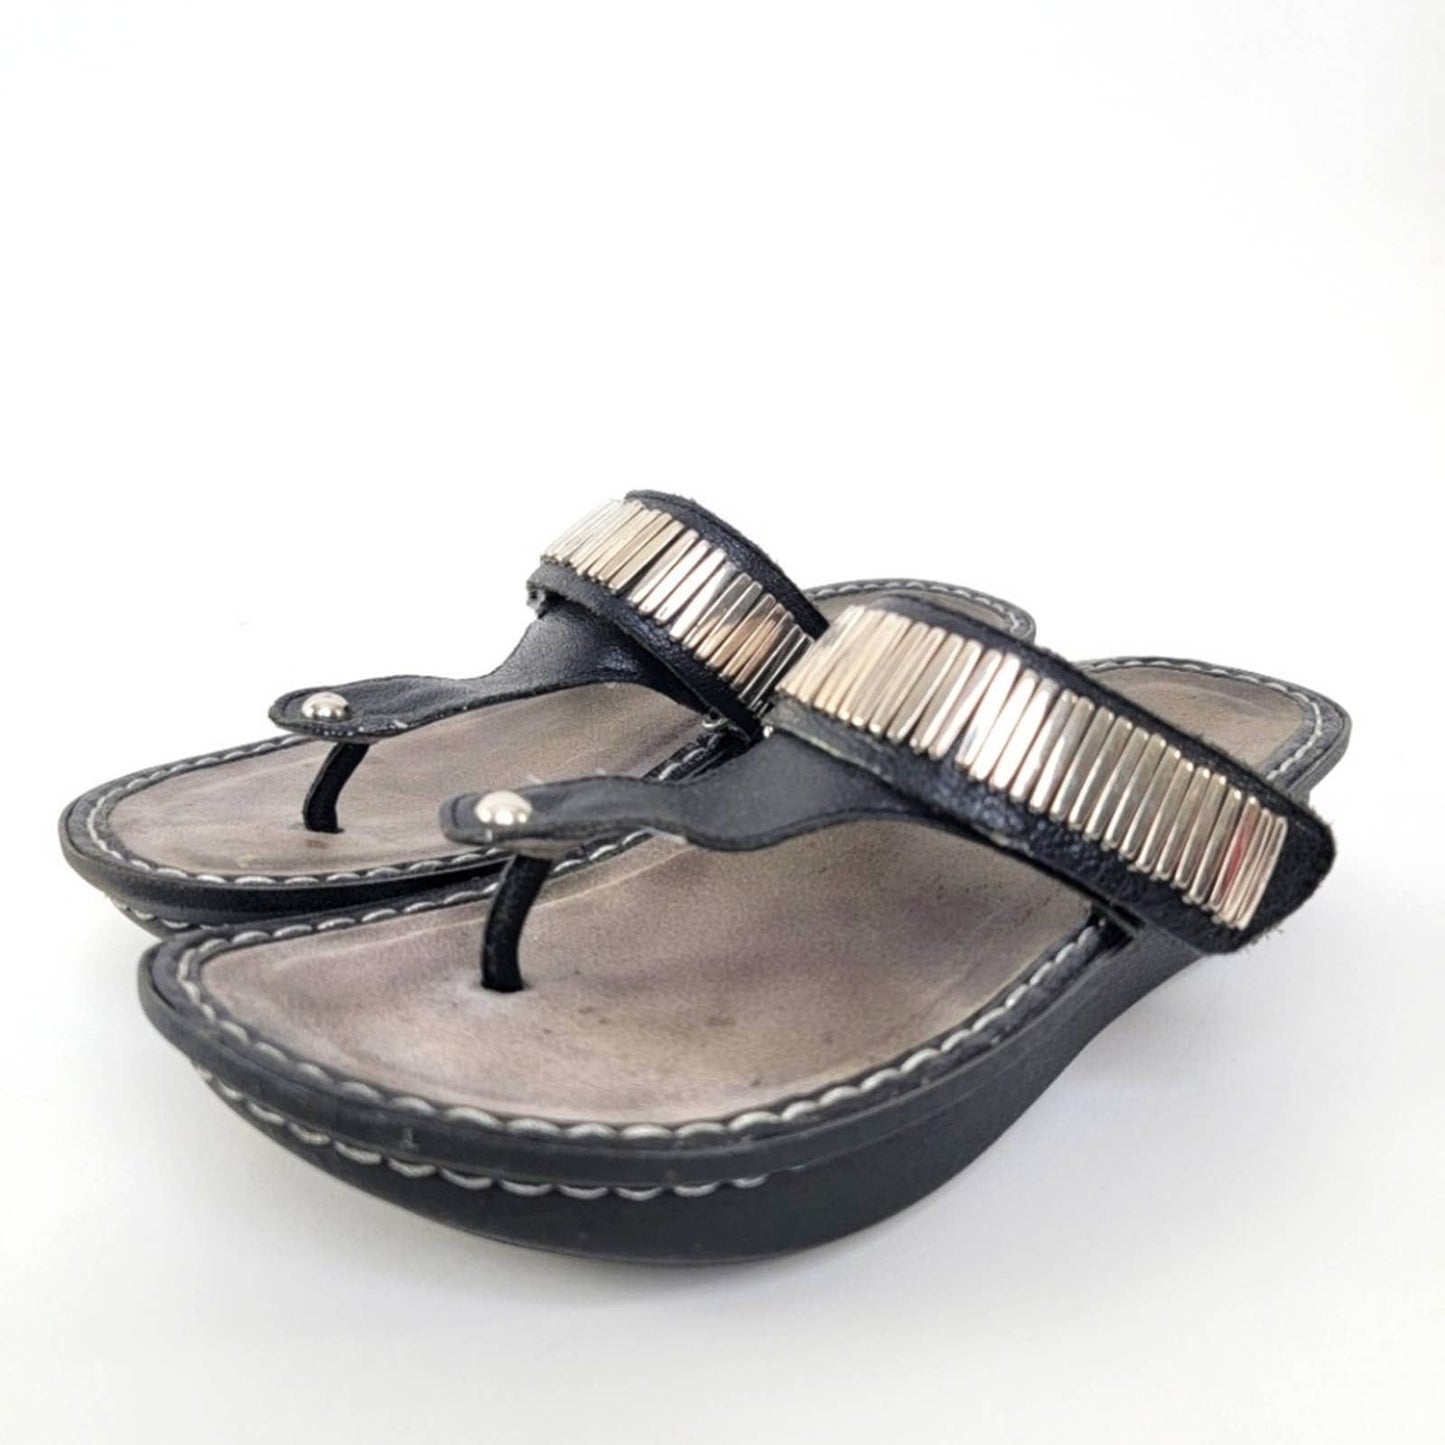 Alegria by PG Lite Carina Black Slip On Thong Platform Sandals - 9